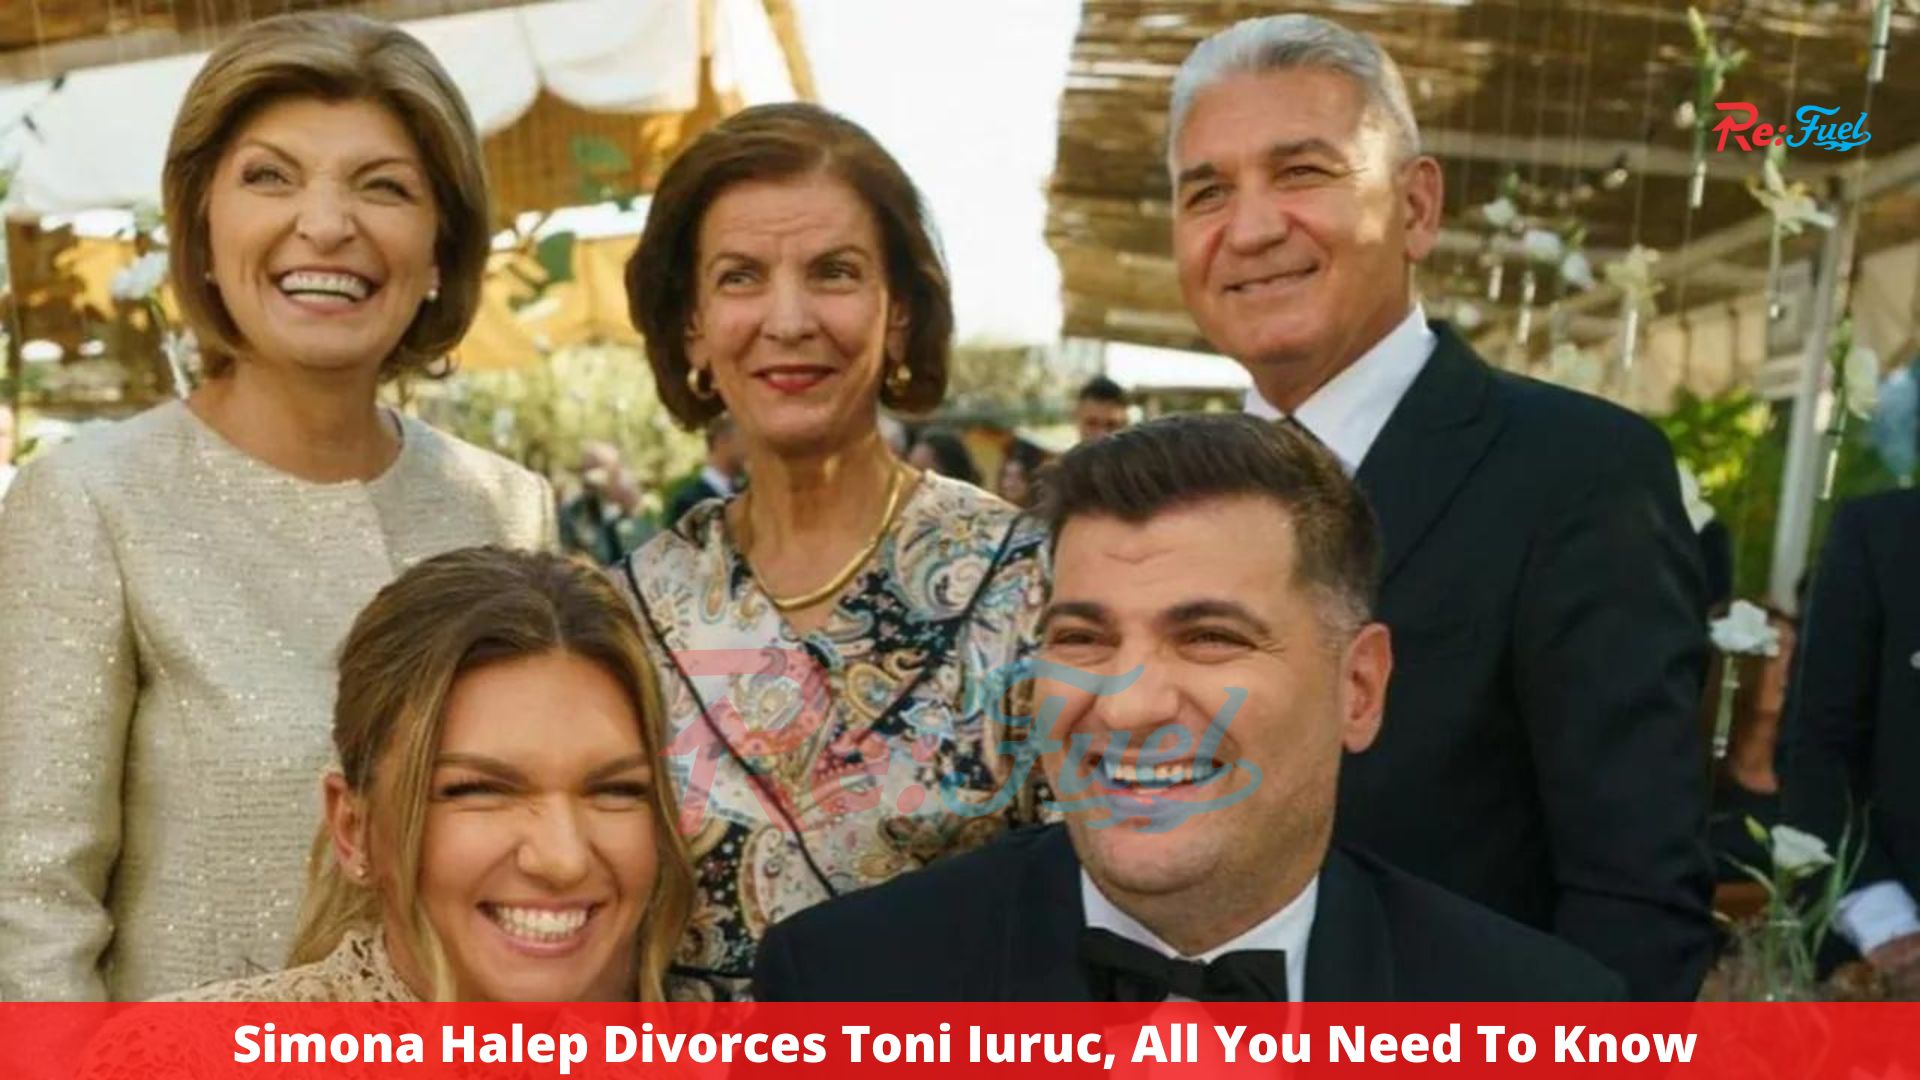 Simona Halep Divorces Toni Iuruc, All You Need To Know